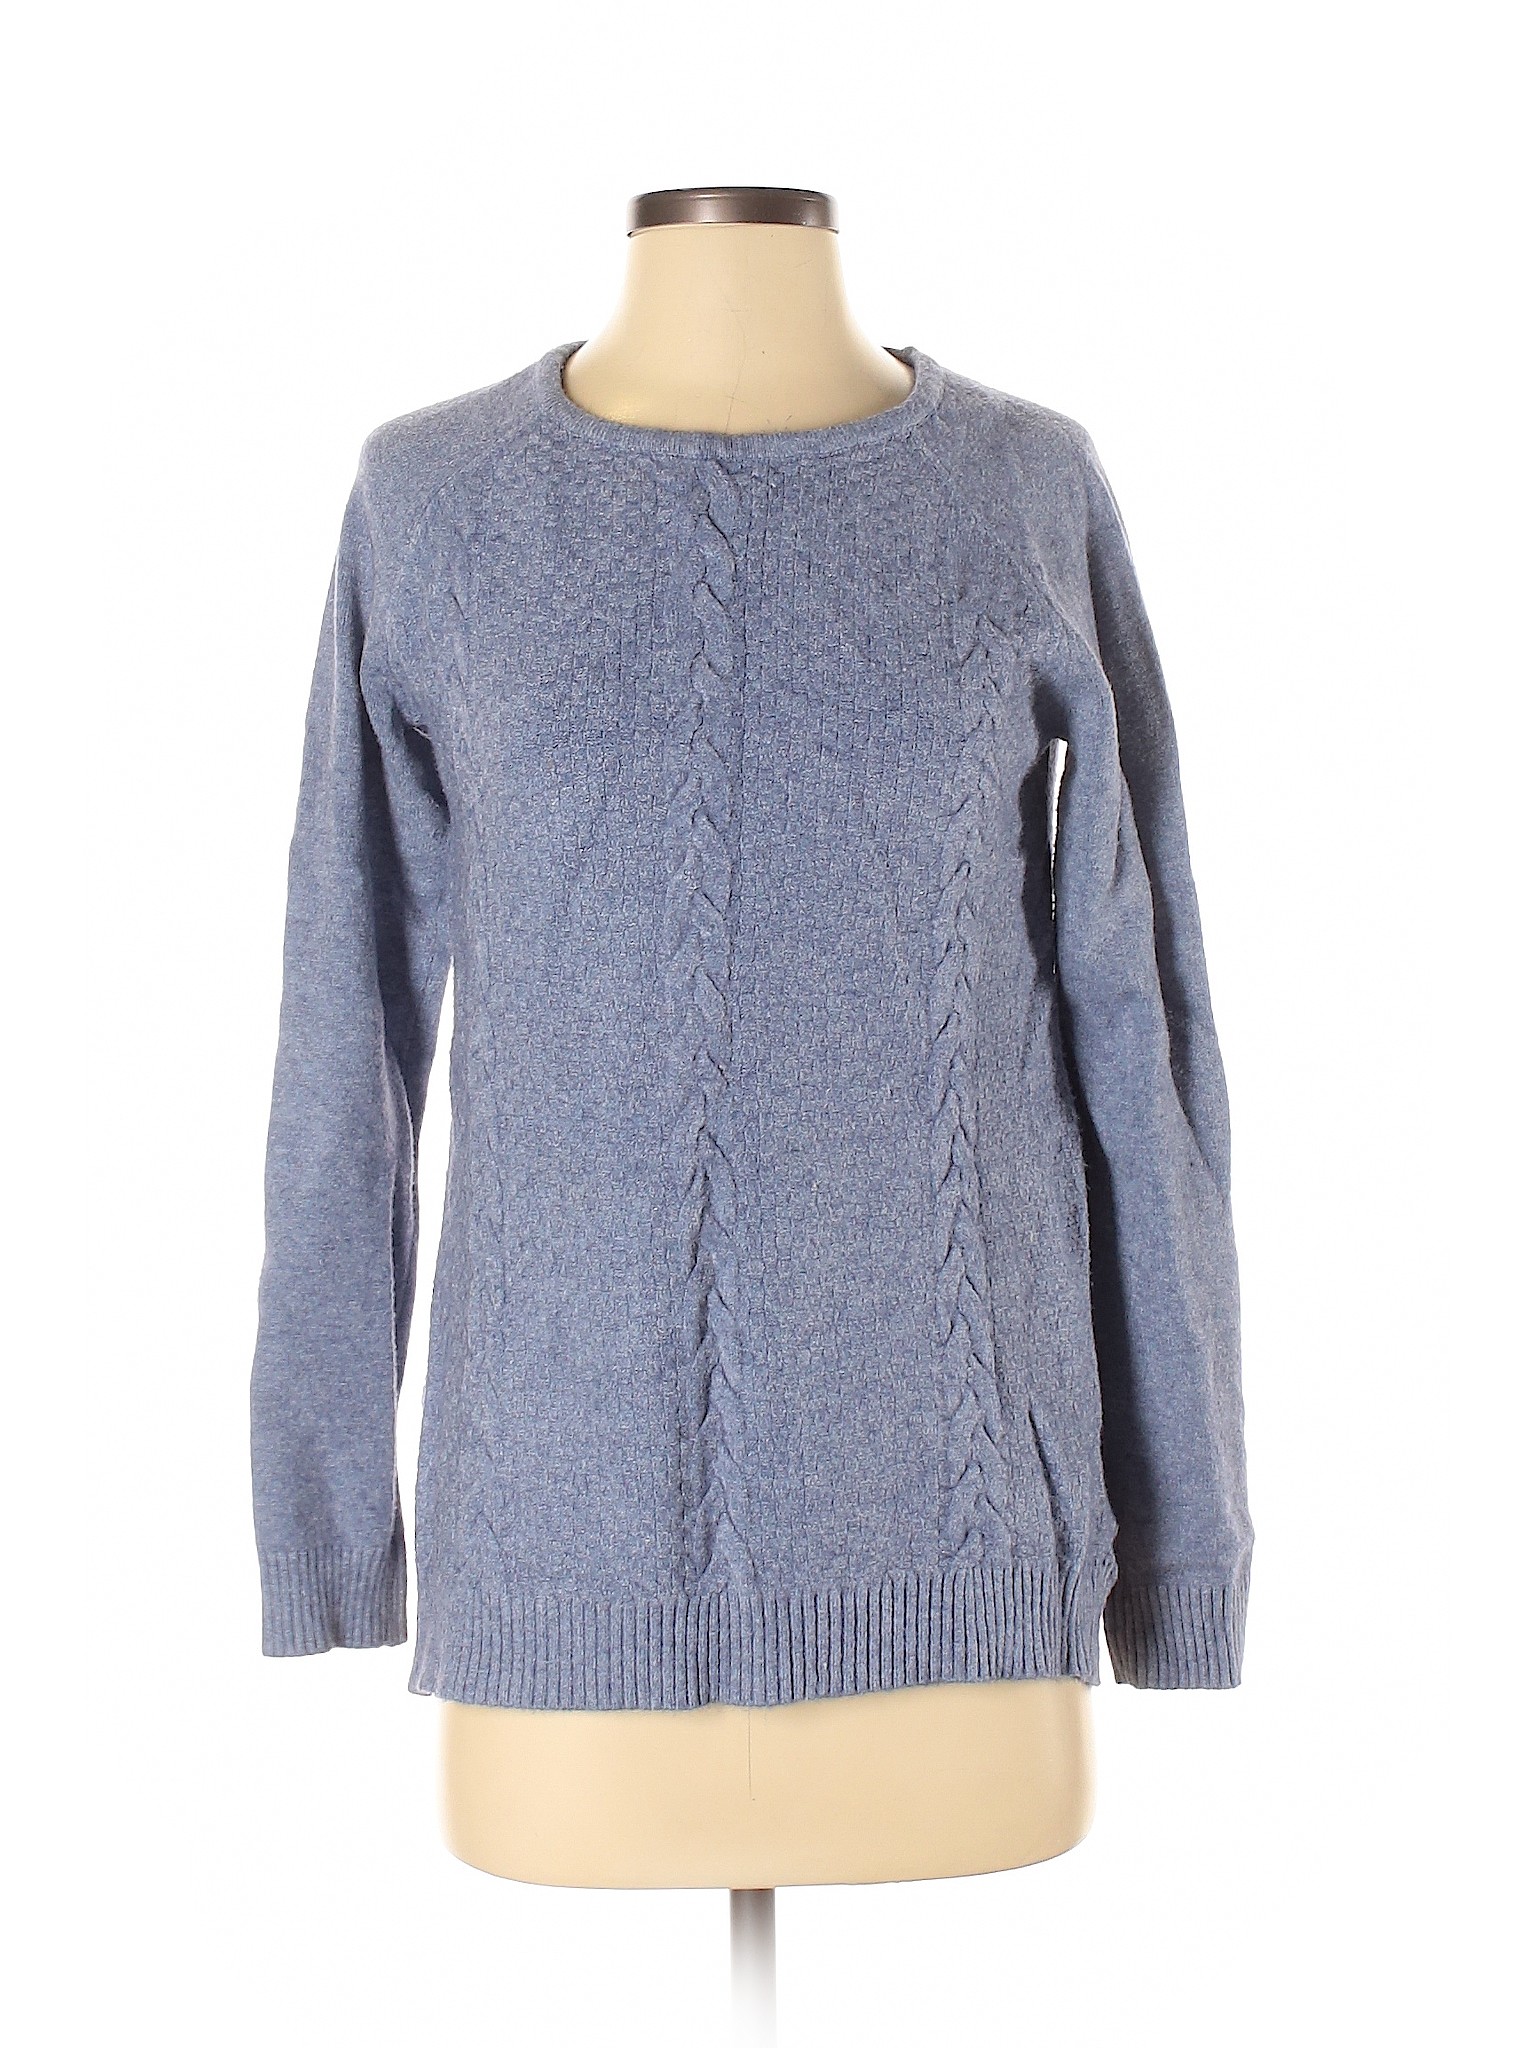 Cyrus Women Blue Pullover Sweater S | eBay